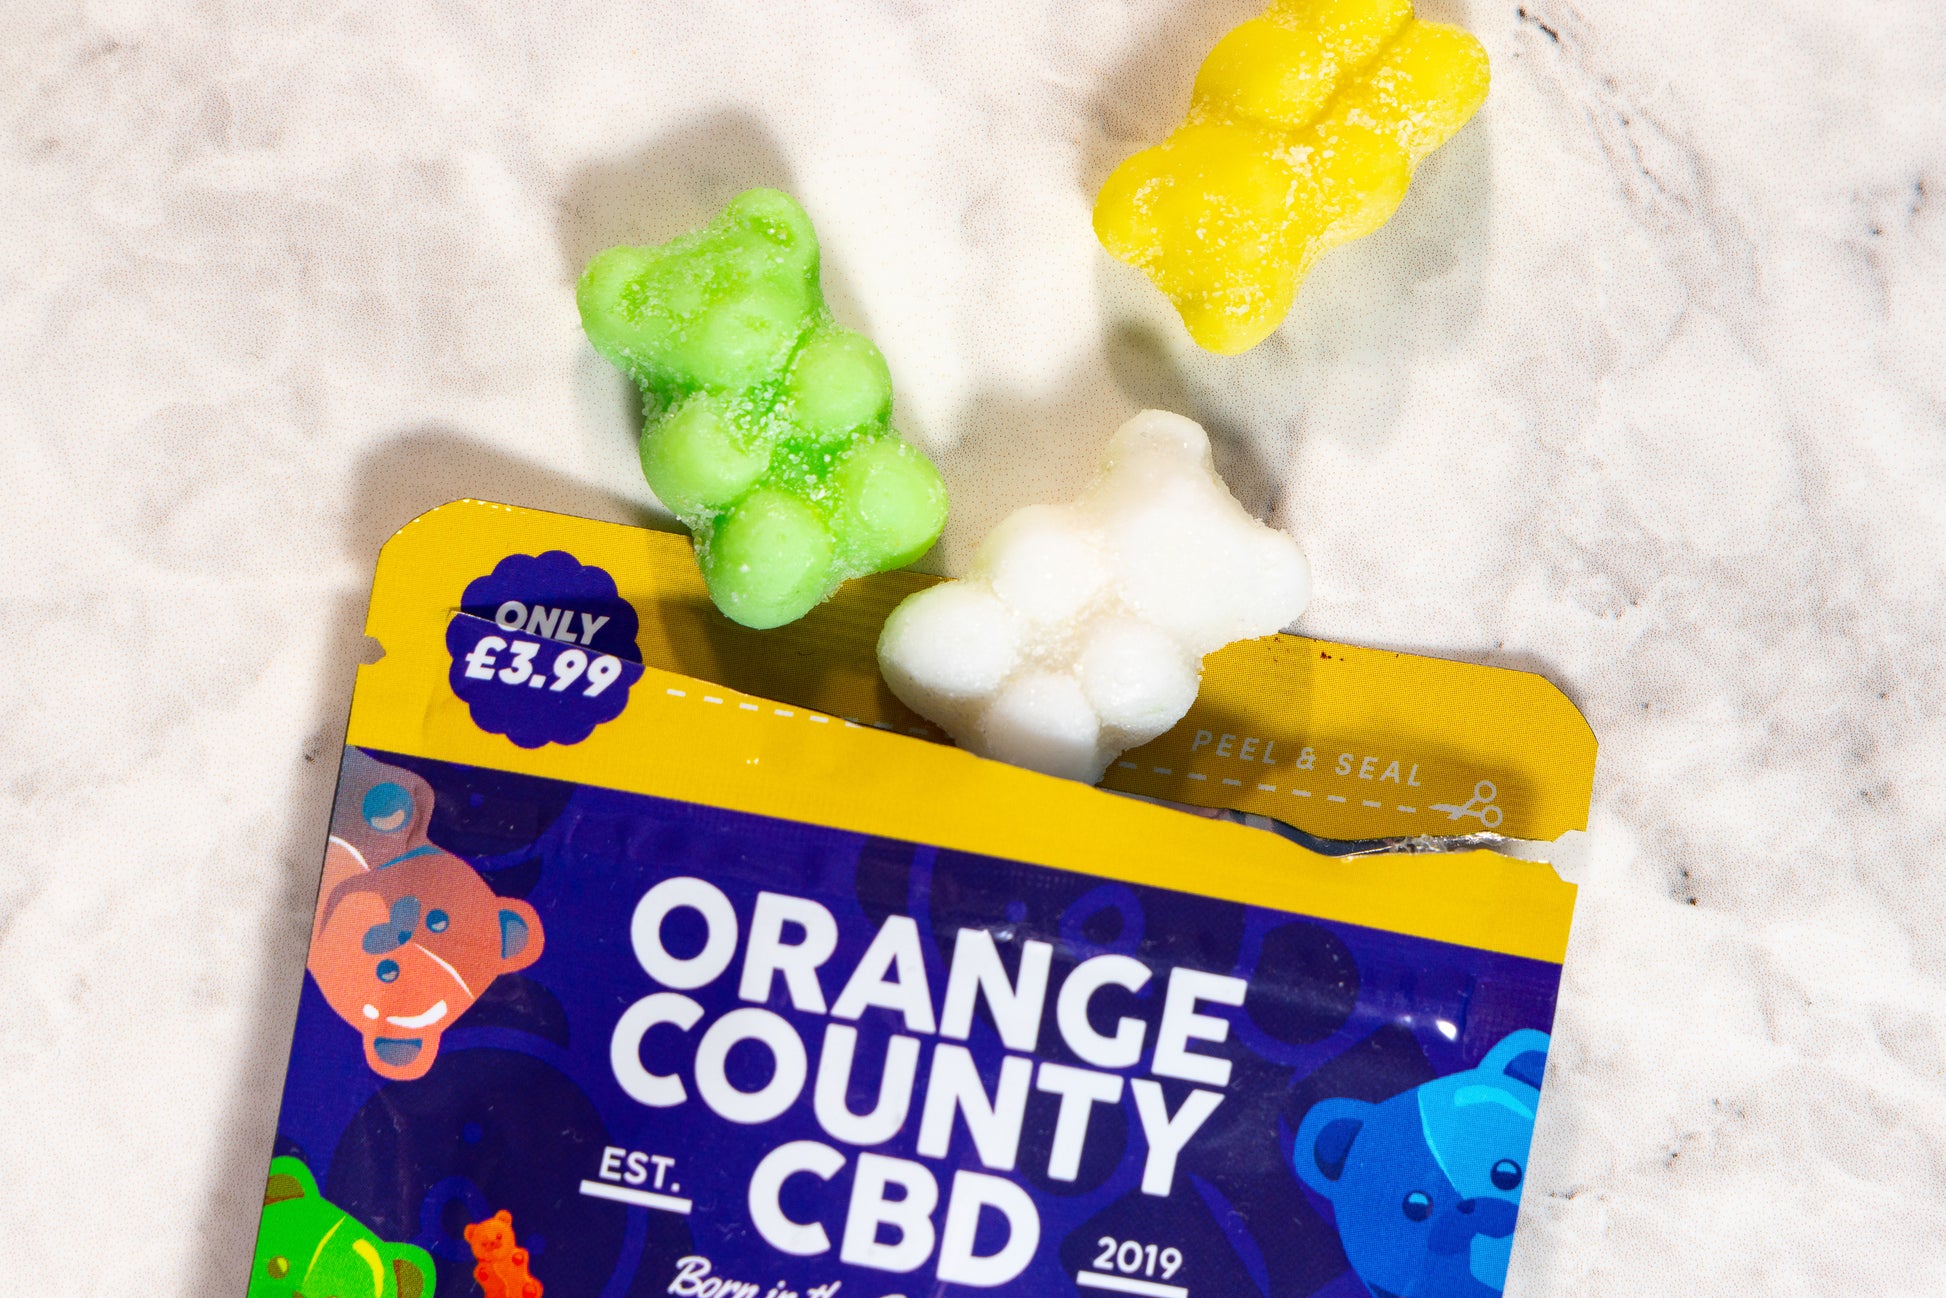 CBD Gummy bears Orange County cbd Vegan and Gluten free